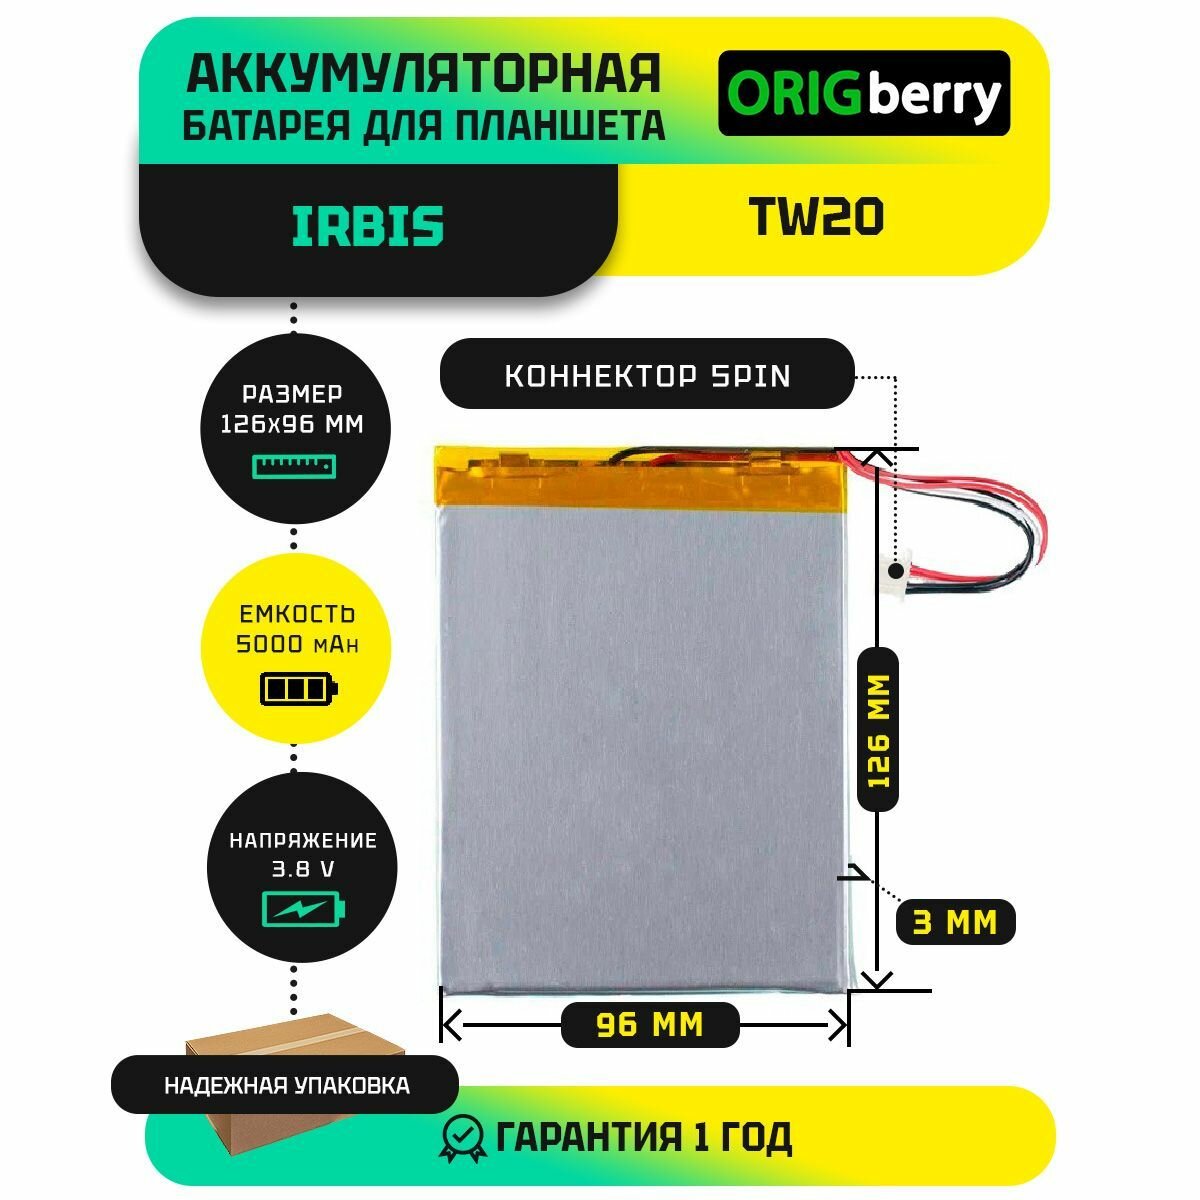 Аккумулятор для планшета Irbis TW20 WiFi 38 V / 5000 mAh / 126мм x 96мм x 3мм / коннектор 5 PIN